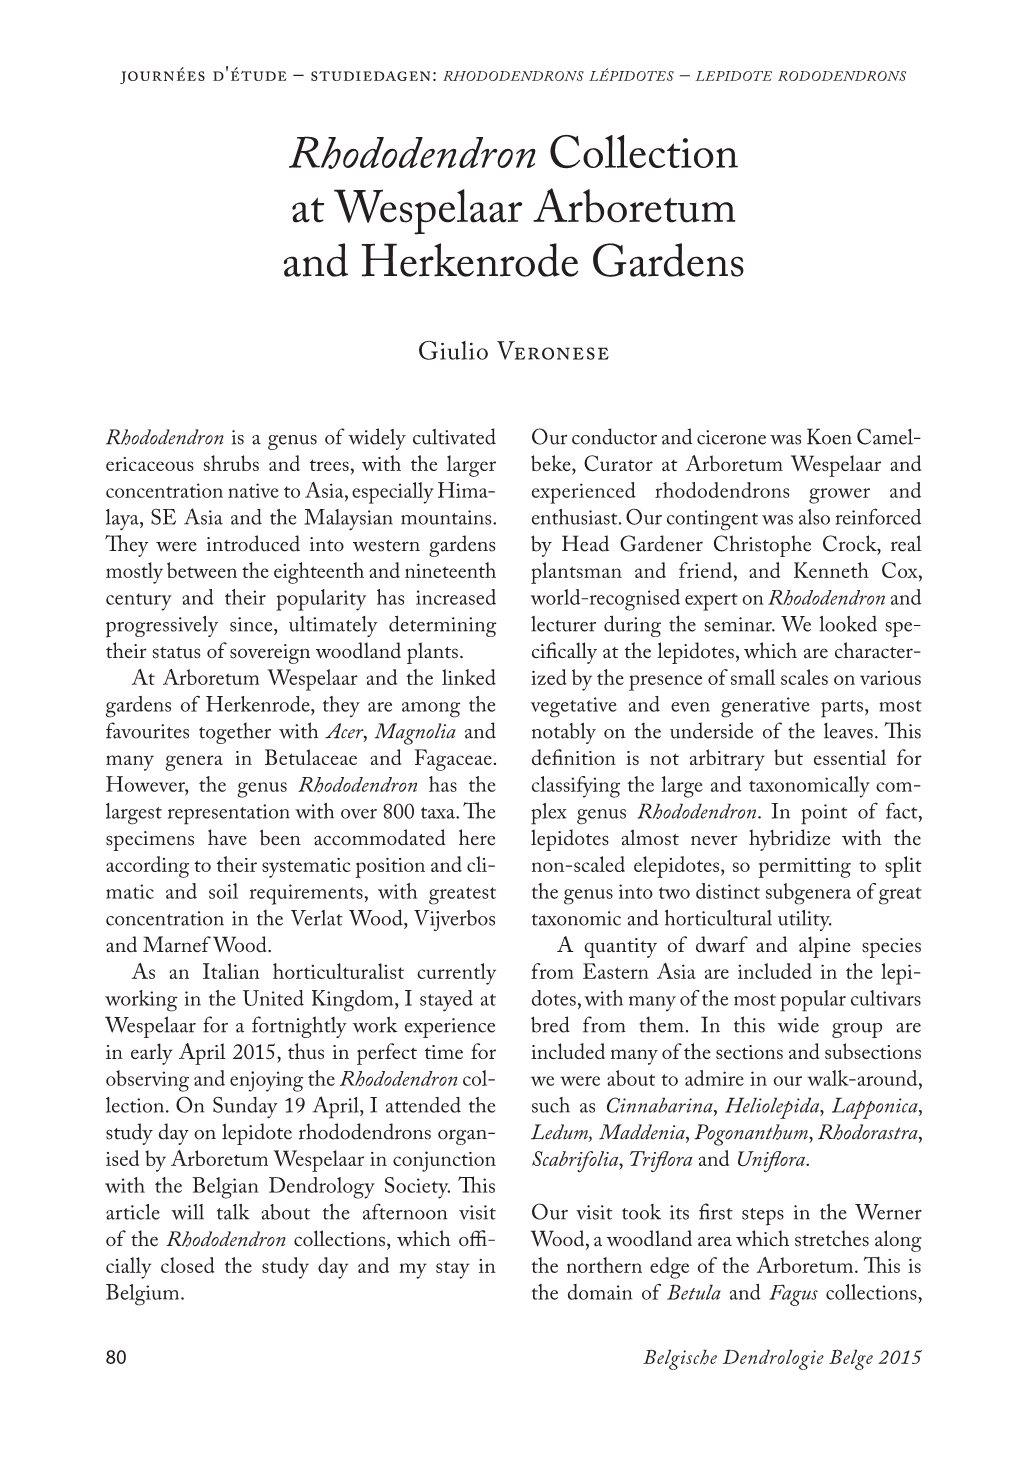 Rhododendron Collection at Wespelaar Arboretum and Herkenrode Gardens